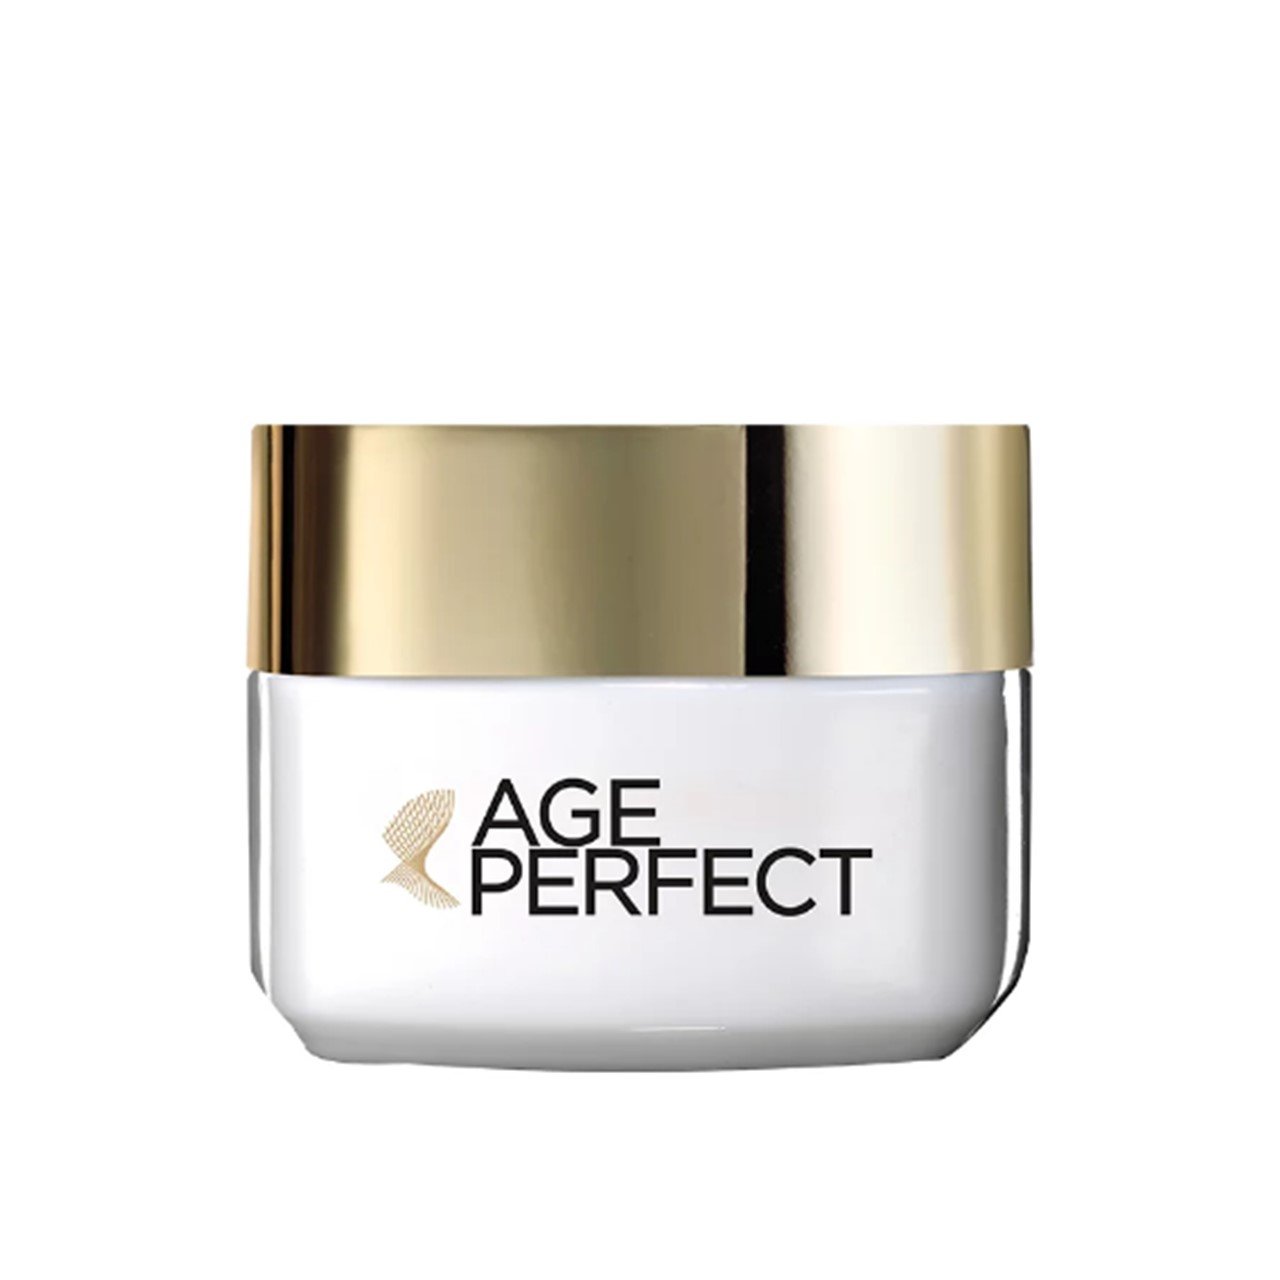 L'Oréal Paris Age Perfect Day Cream 50ml (1.69fl oz)